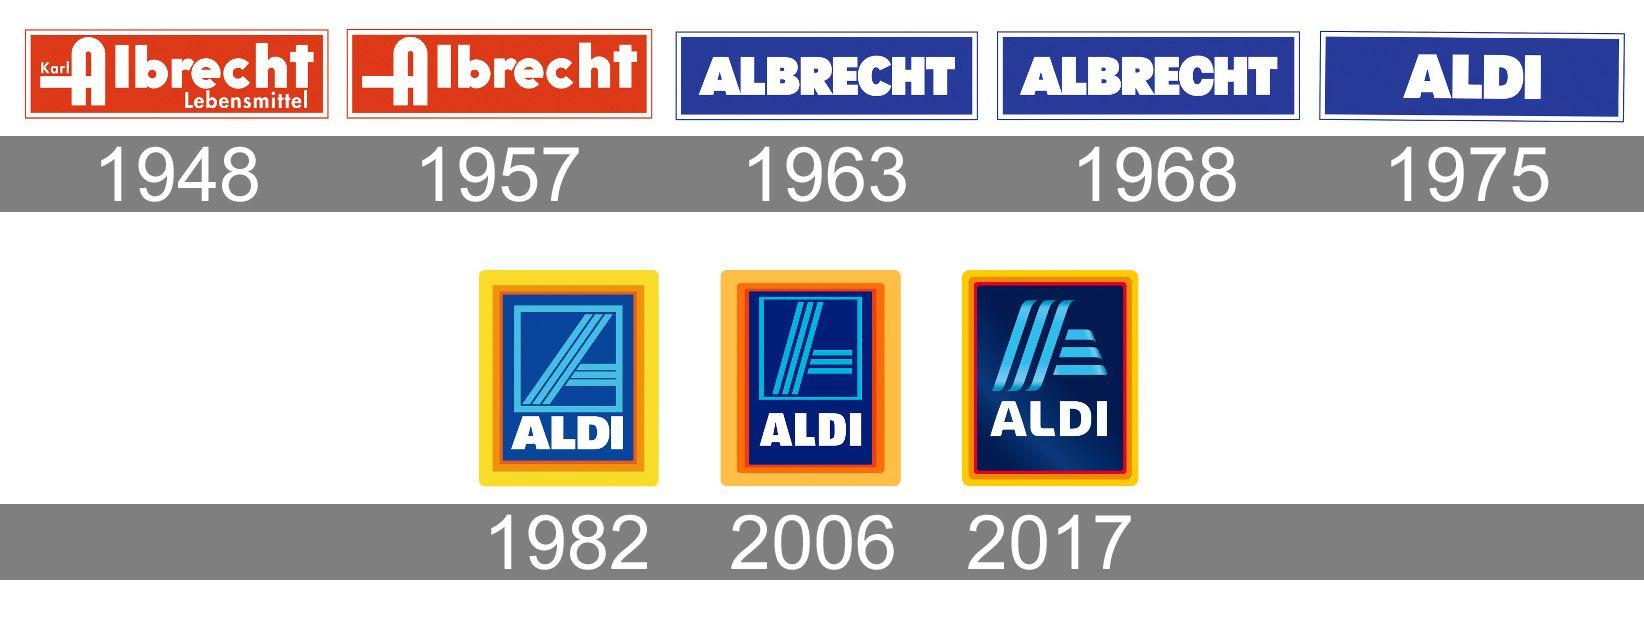 Aldi Logo - Aldi Logo, Aldi Symbol, Meaning, History and Evolution